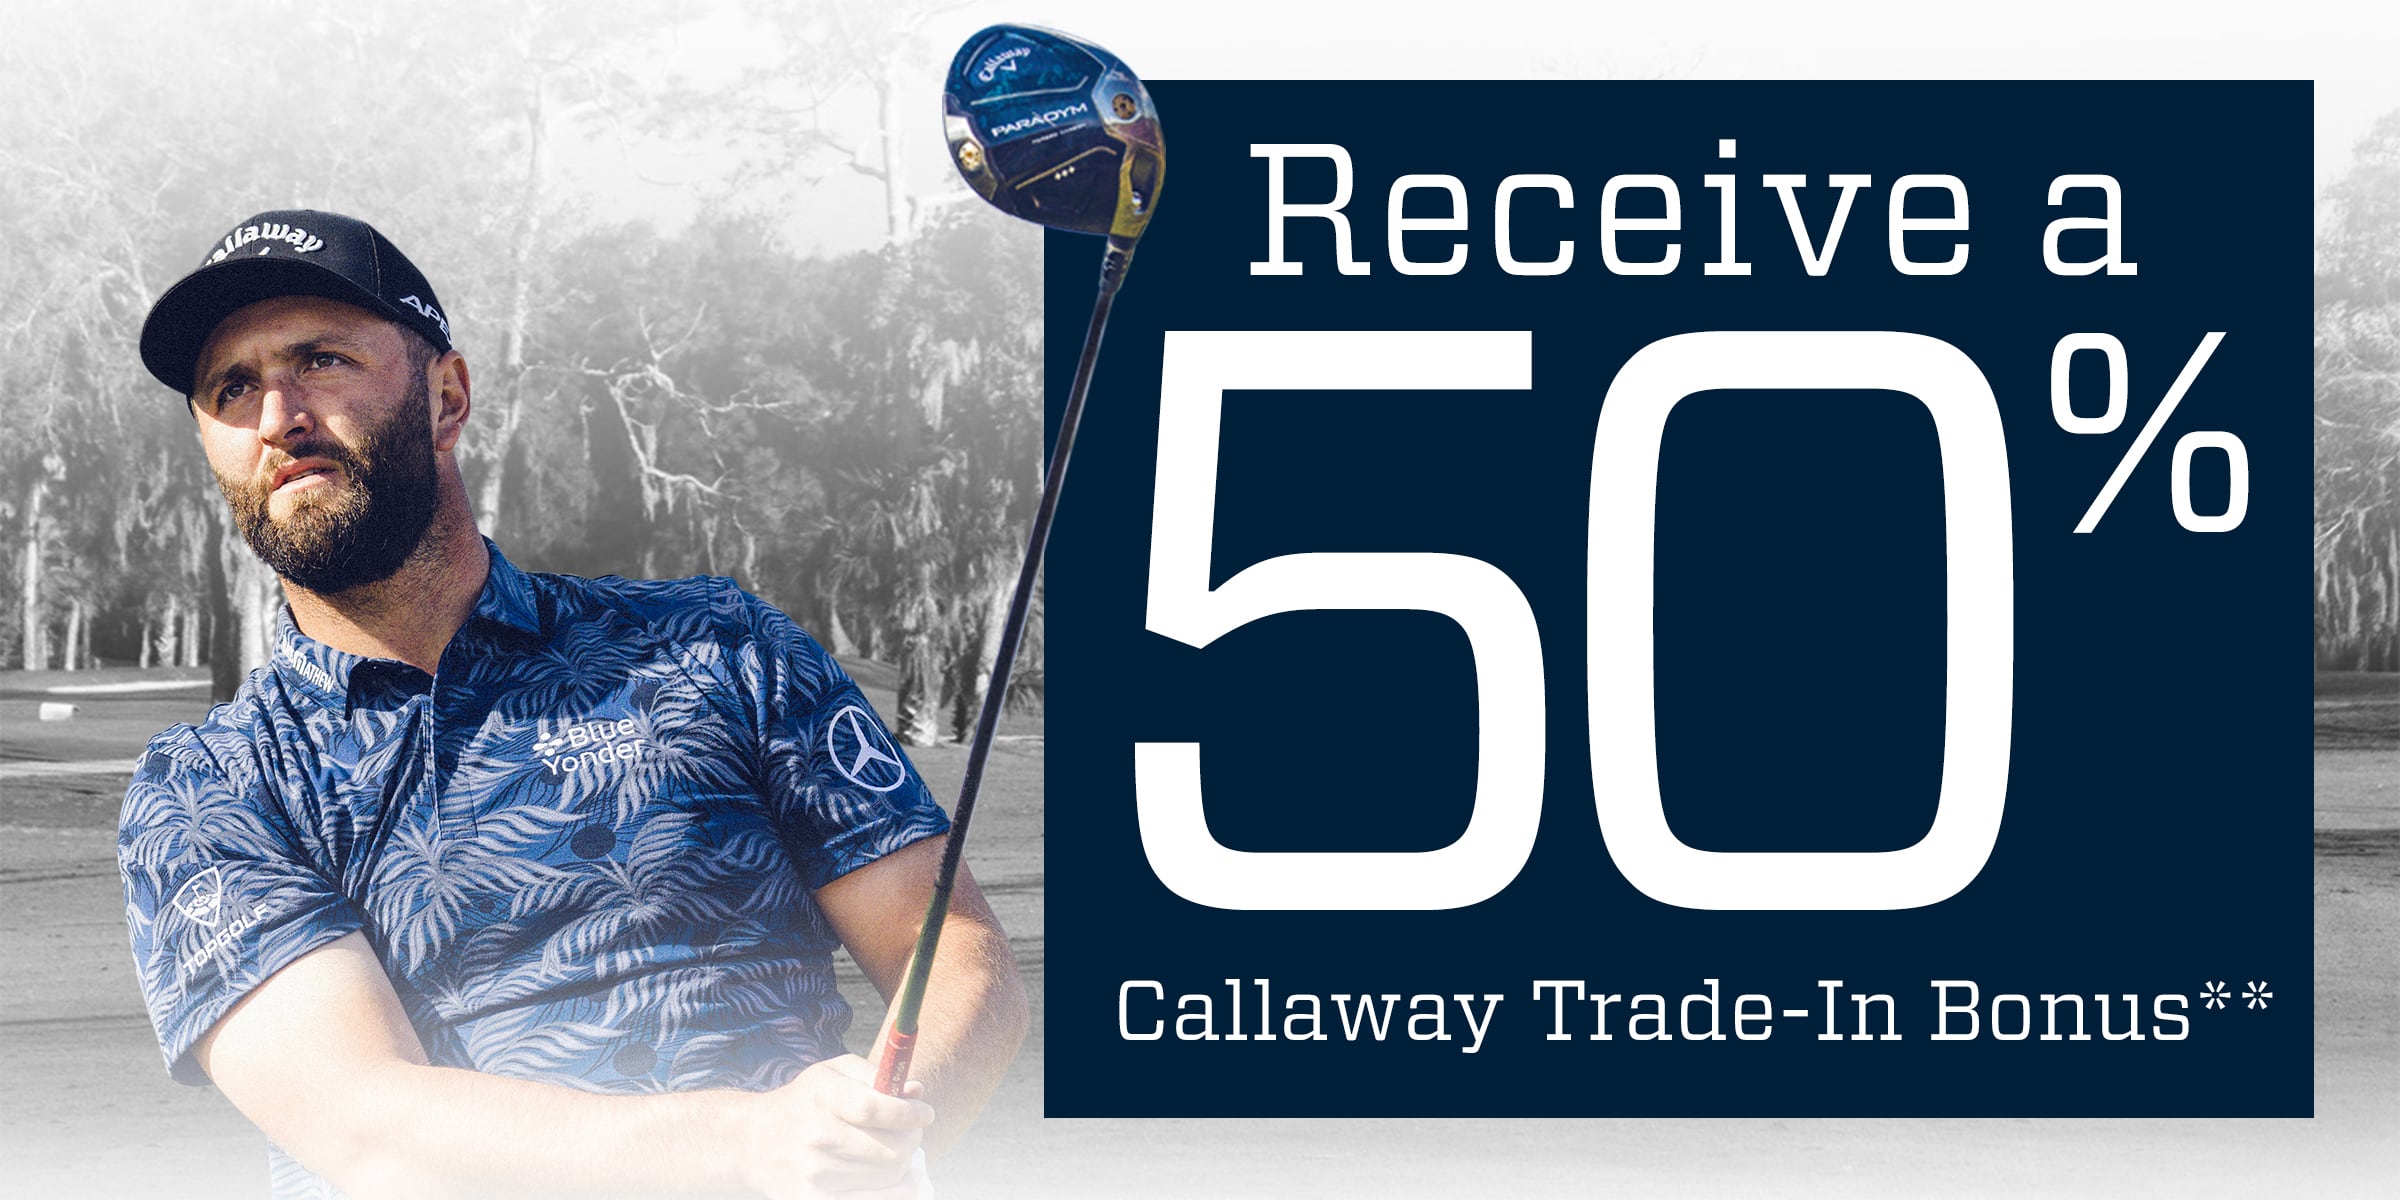  Receive a 50% Callaway Trade-In Bonus**